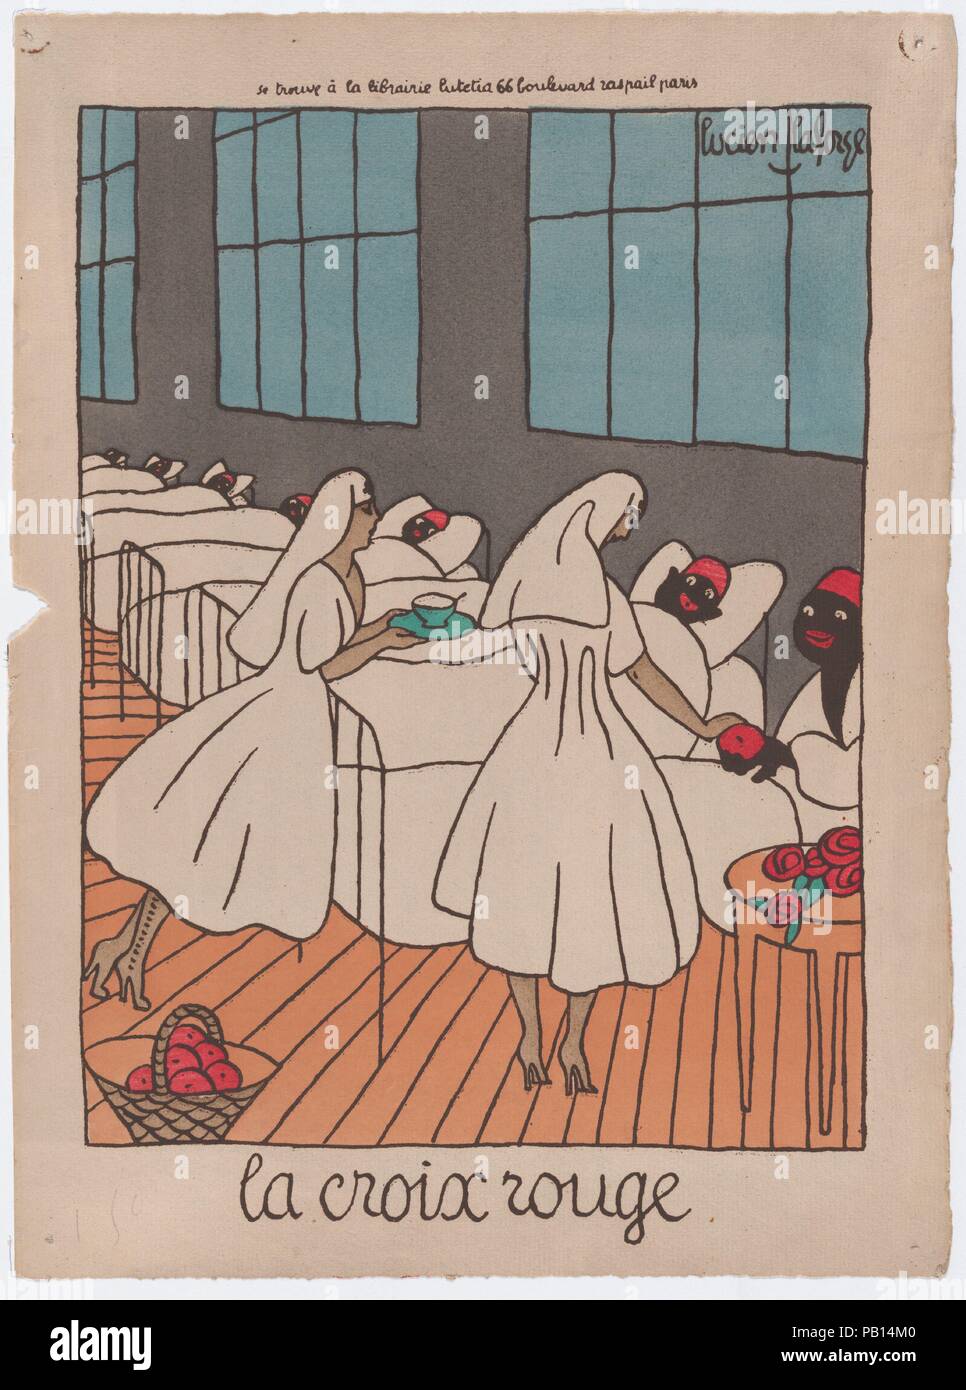 La croix rouge. Artist: Lucien Laforge (French, Paris 1889-1952 Paris). Dimensions: Image: 10 1/4 × 7 11/16 in. (26 × 19.5 cm)  Sheet: 12 1/2 × 9 3/16 in. (31.8 × 23.3 cm). Date: n.d.. Museum: Metropolitan Museum of Art, New York, USA. Stock Photo